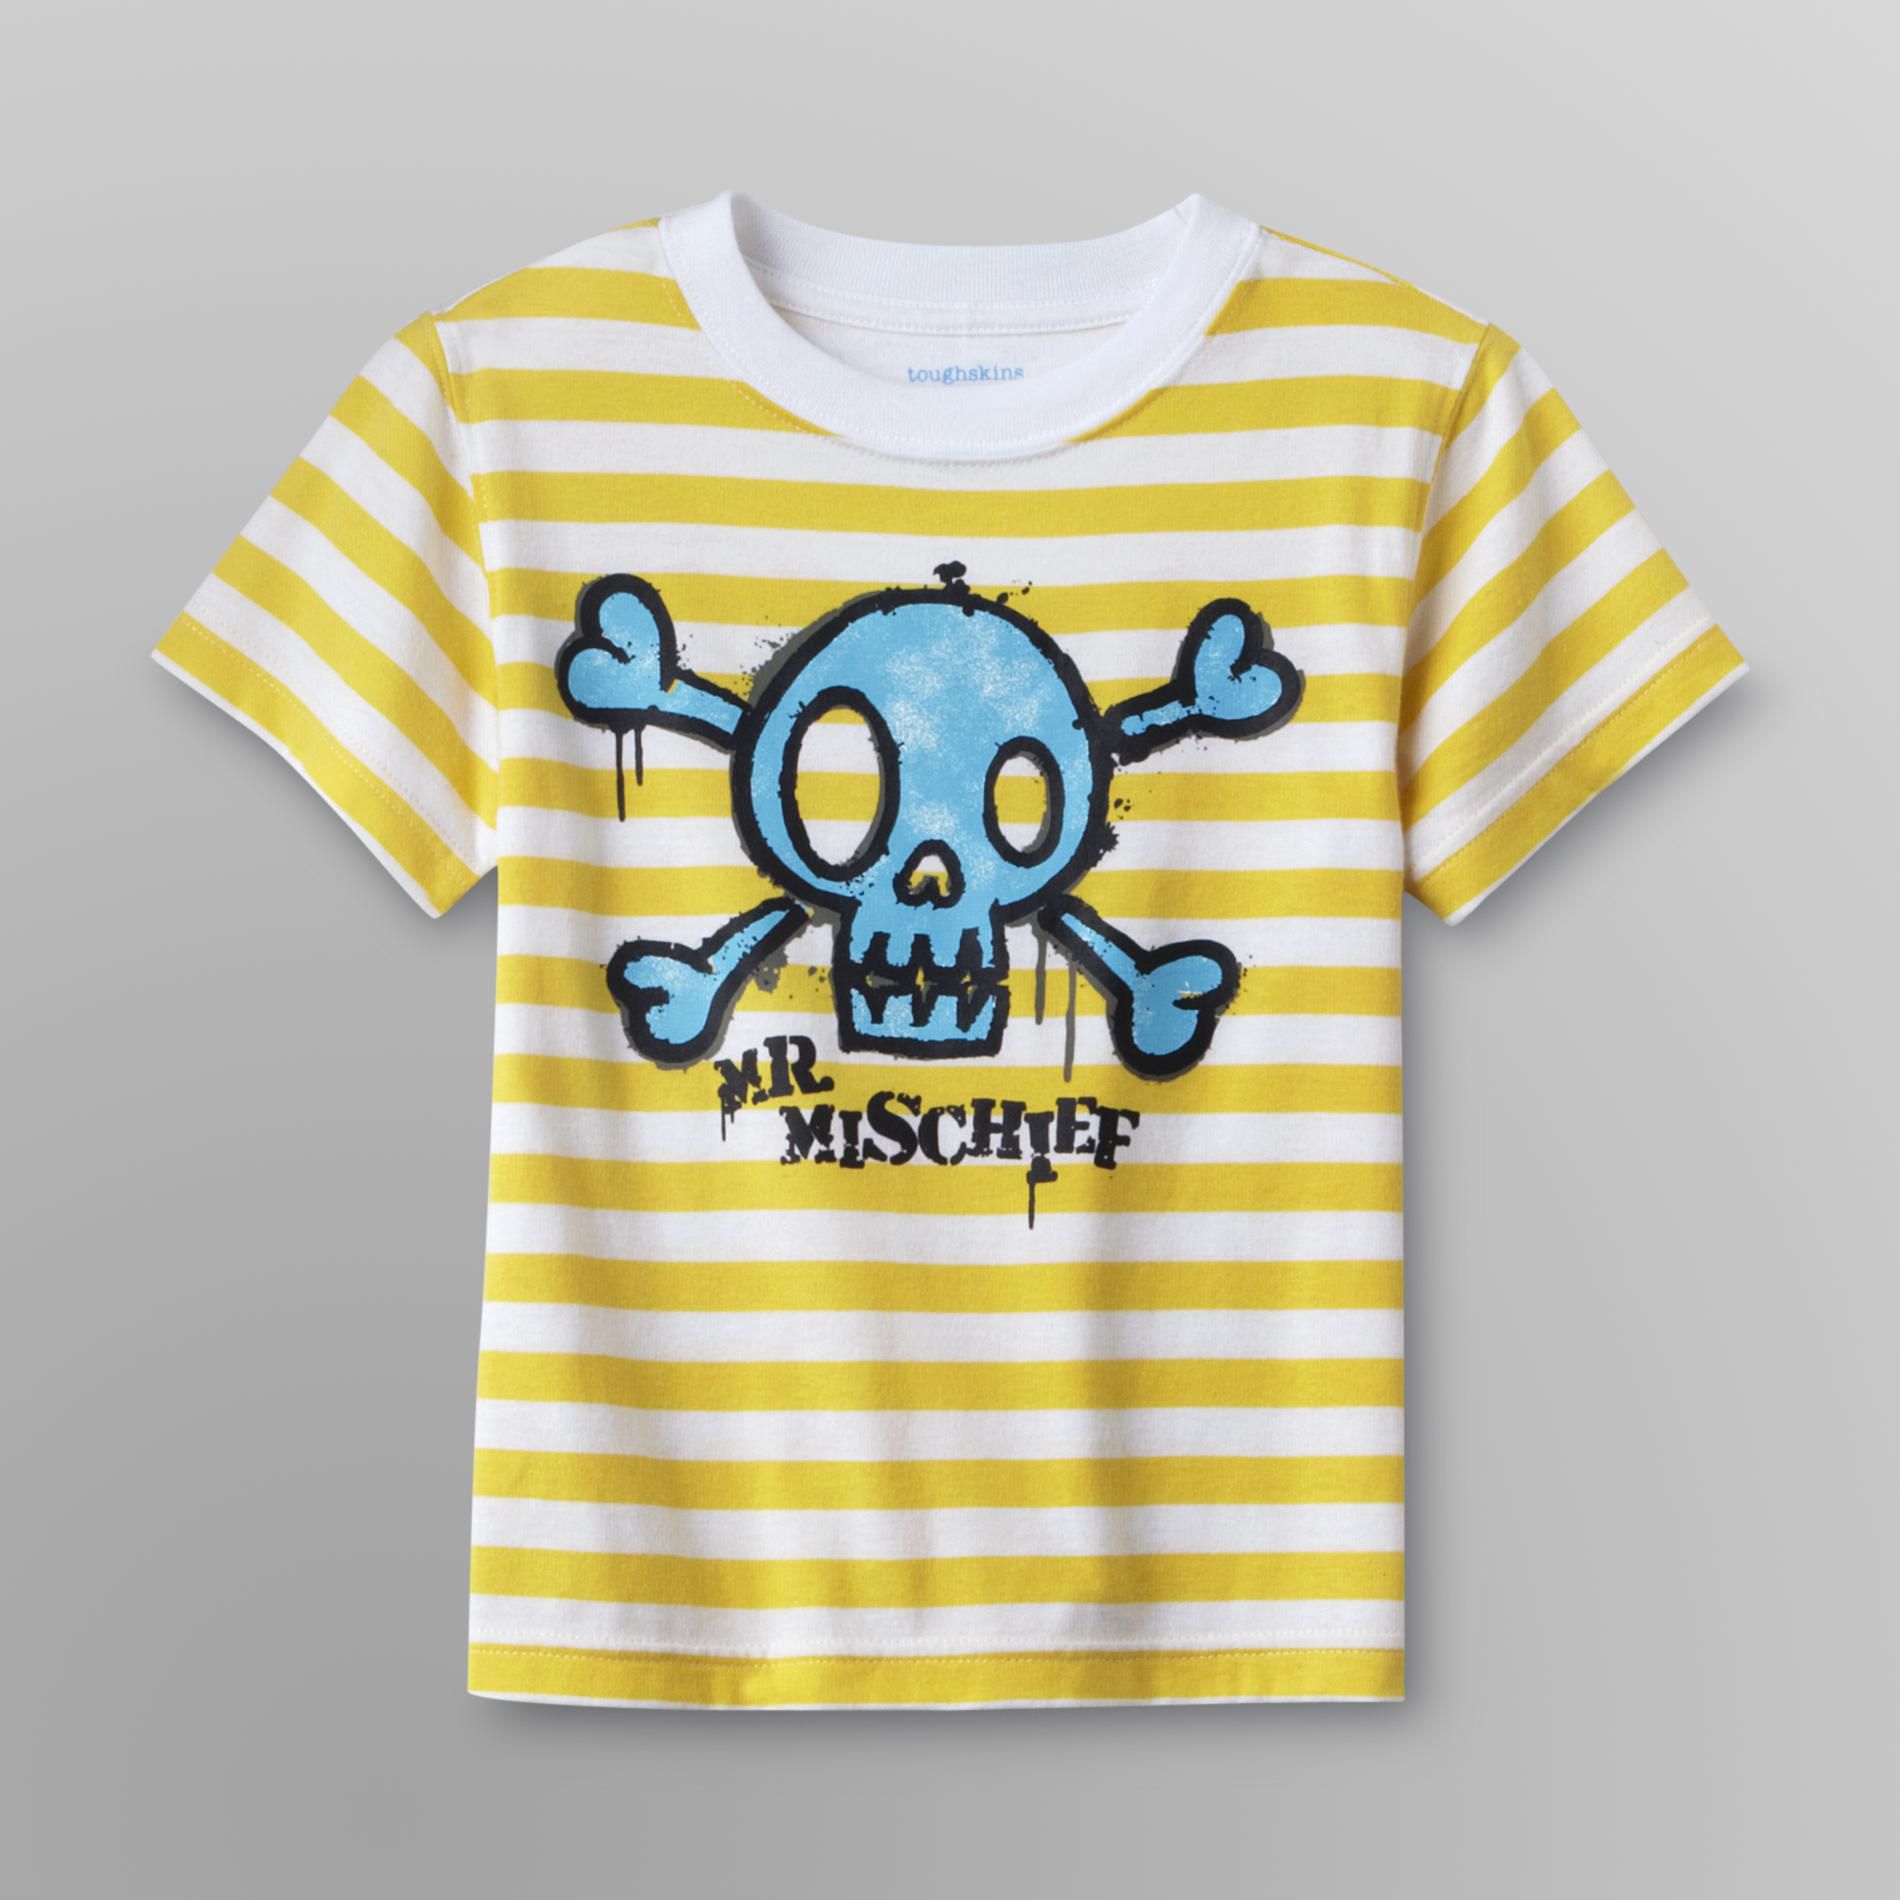 Toughskins Infant & Toddler Boy's Graphic Print T-Shirt- Skull & Crossbones